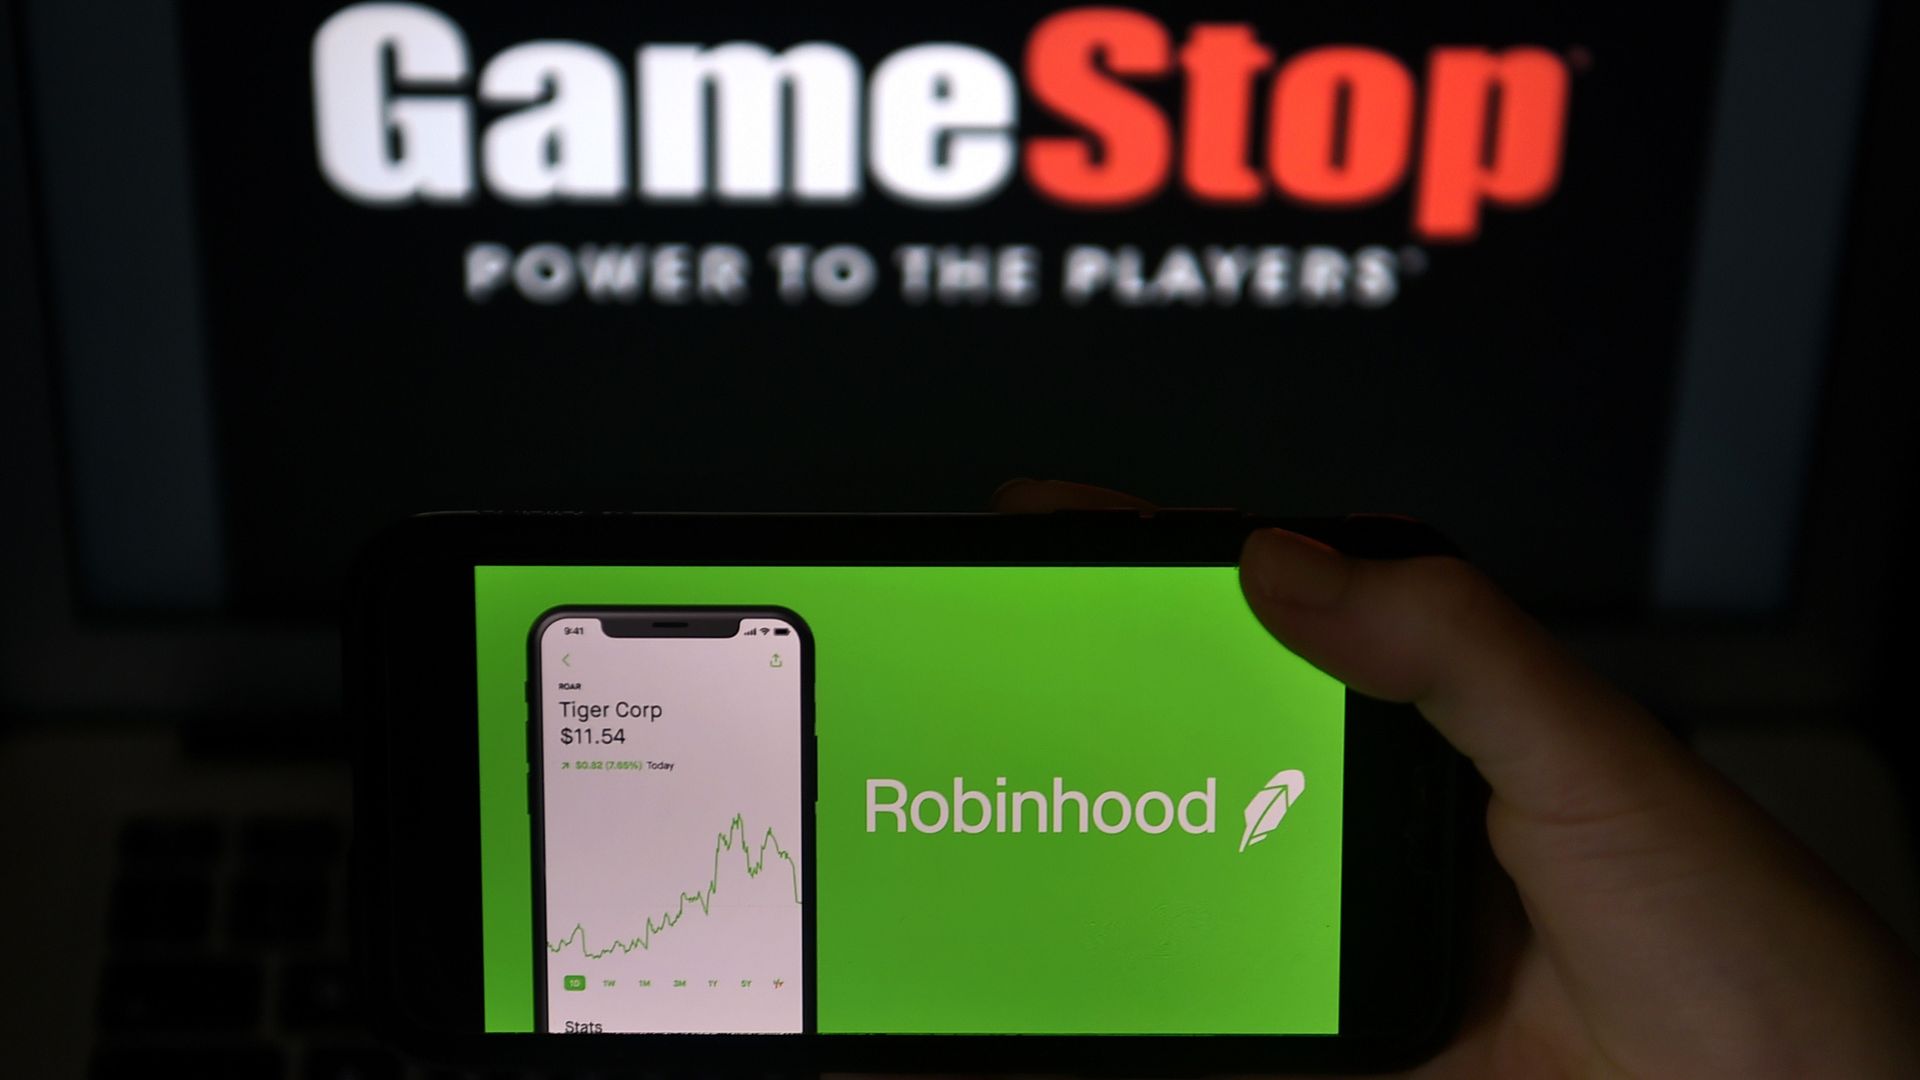 Robinhood and GameStop logos